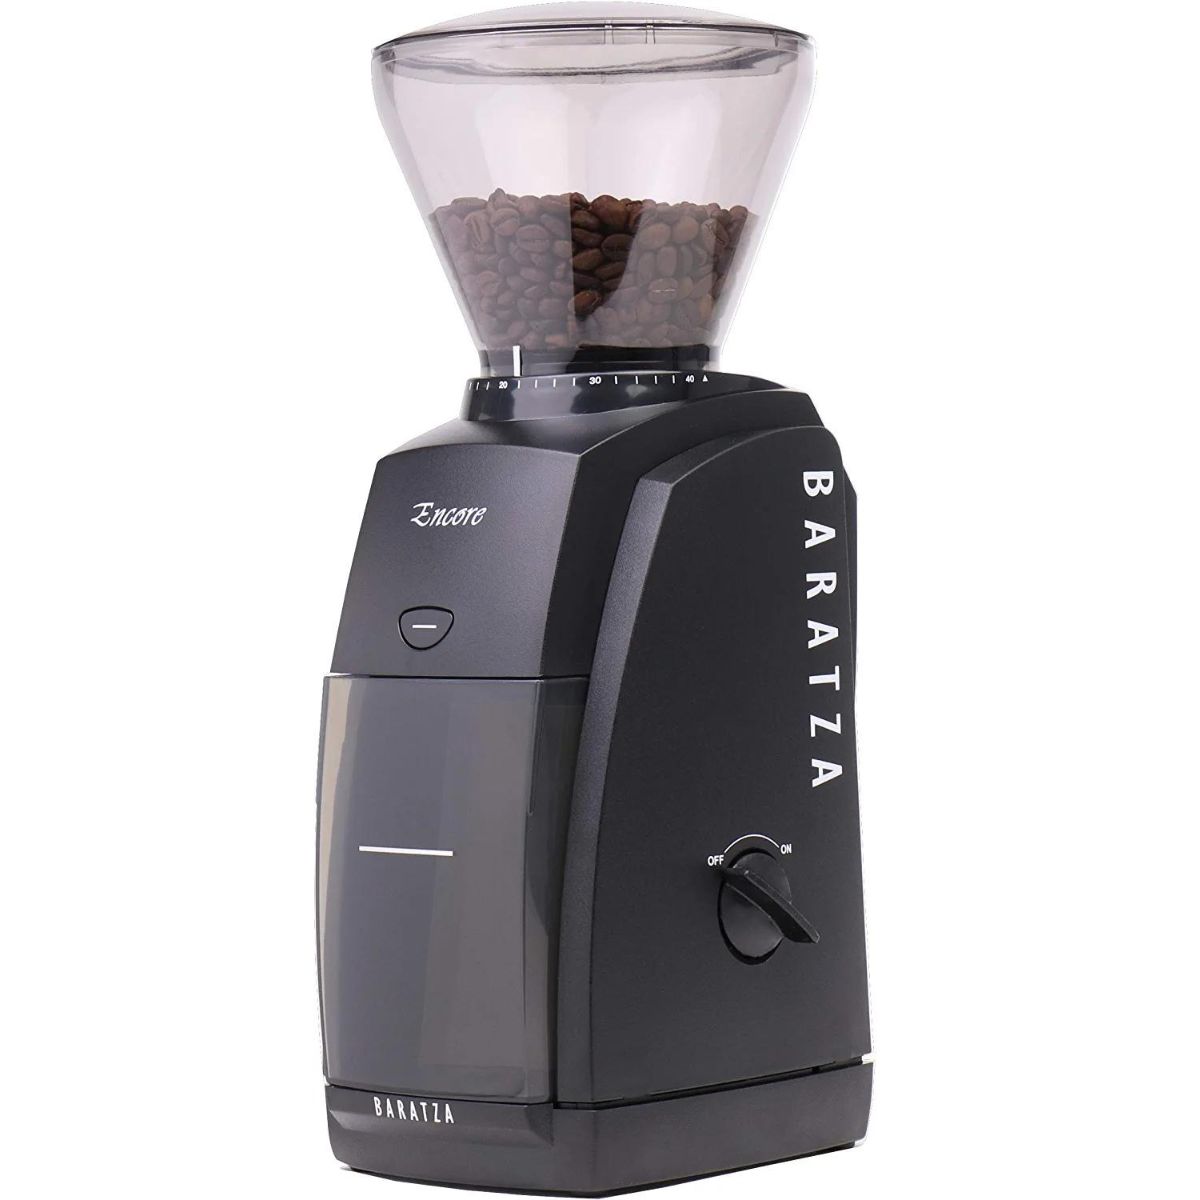 Baratza encore coffee grinder in black